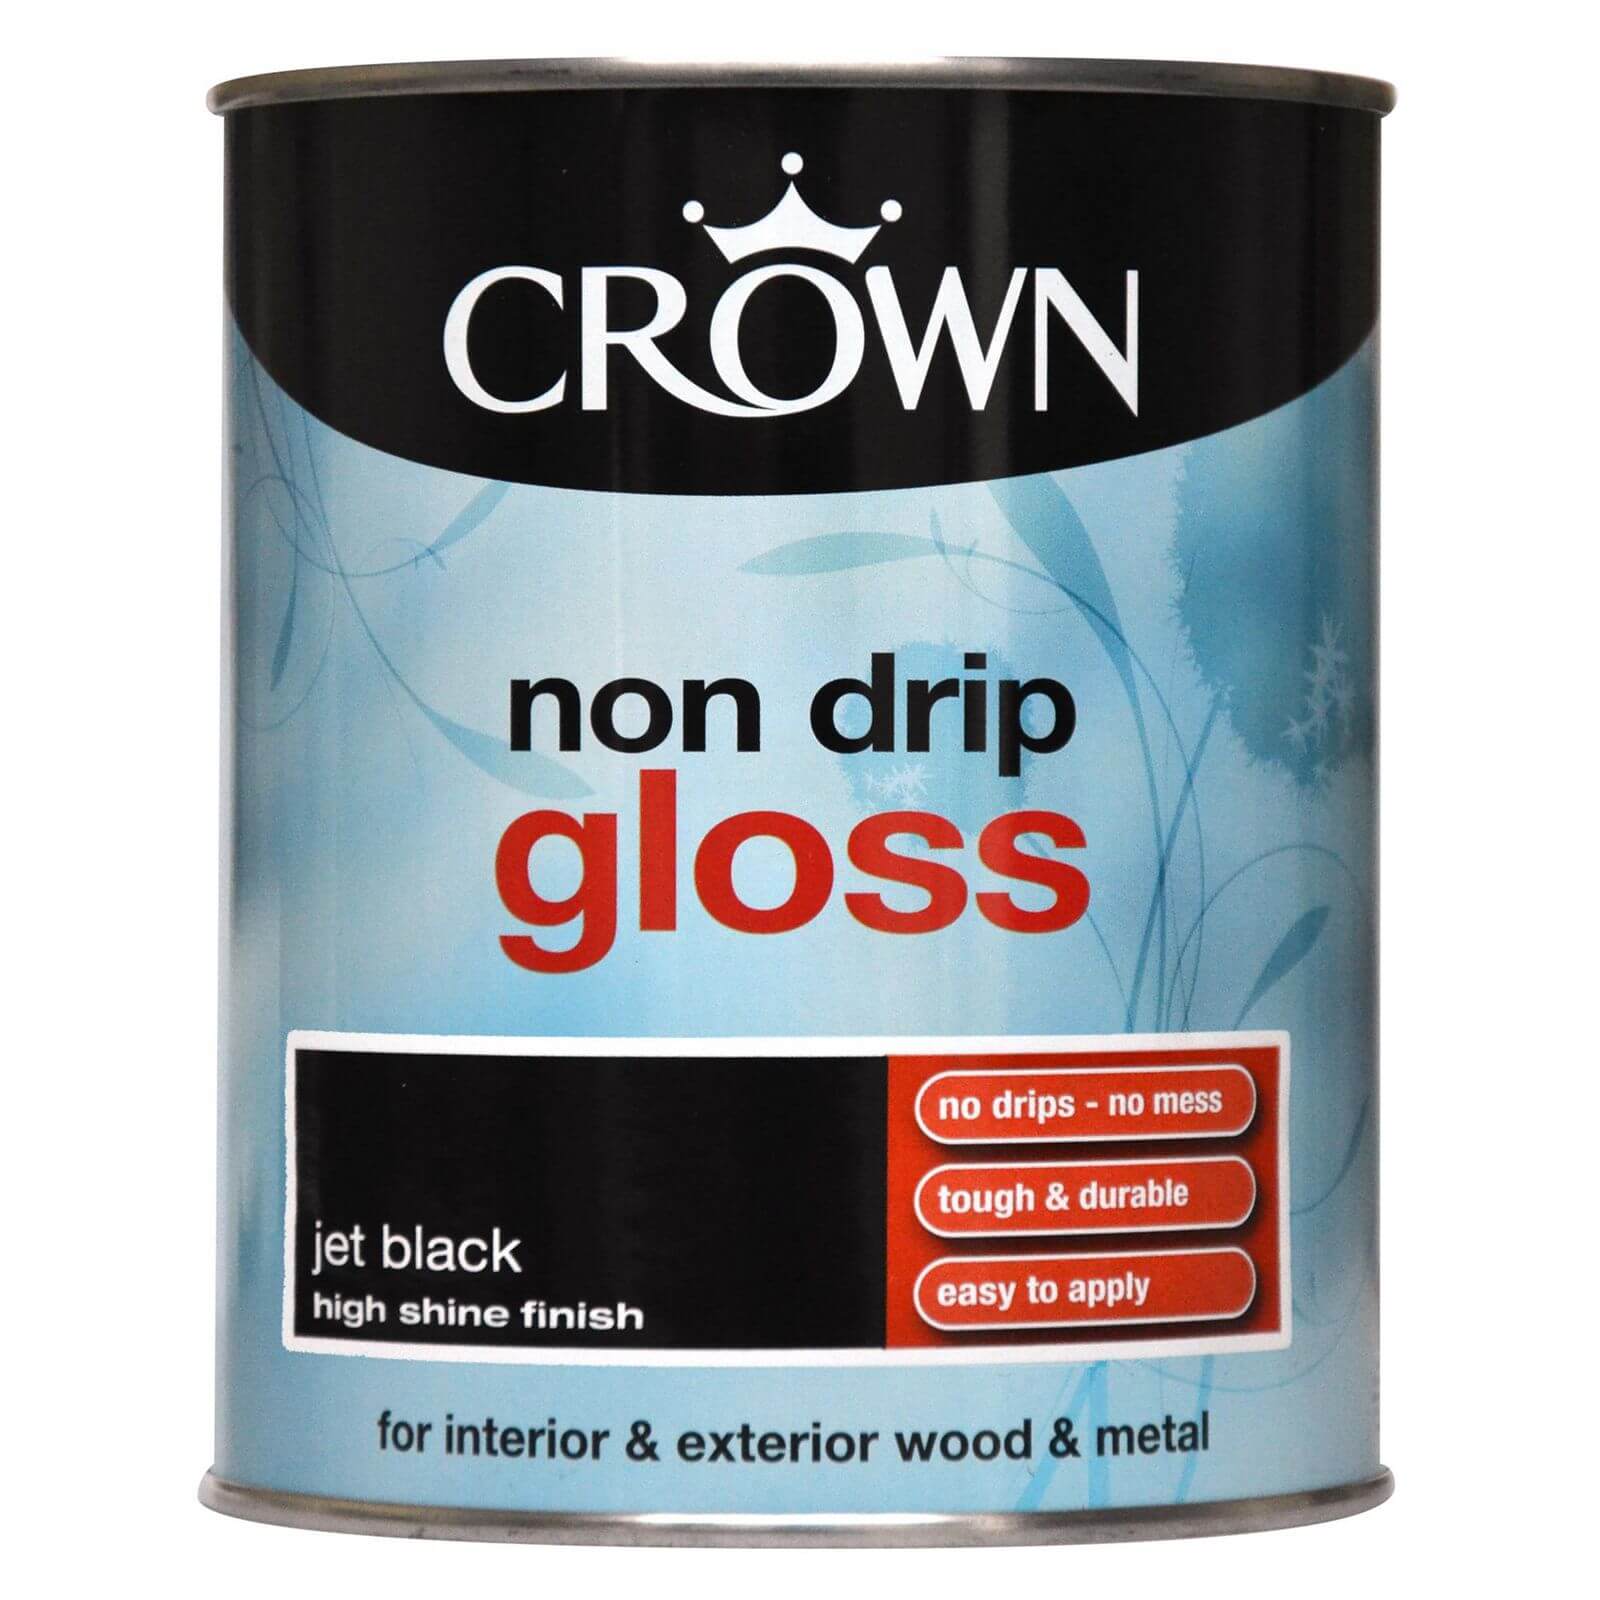 Crown Non Drip Gloss Paint Jet Black - 750ml